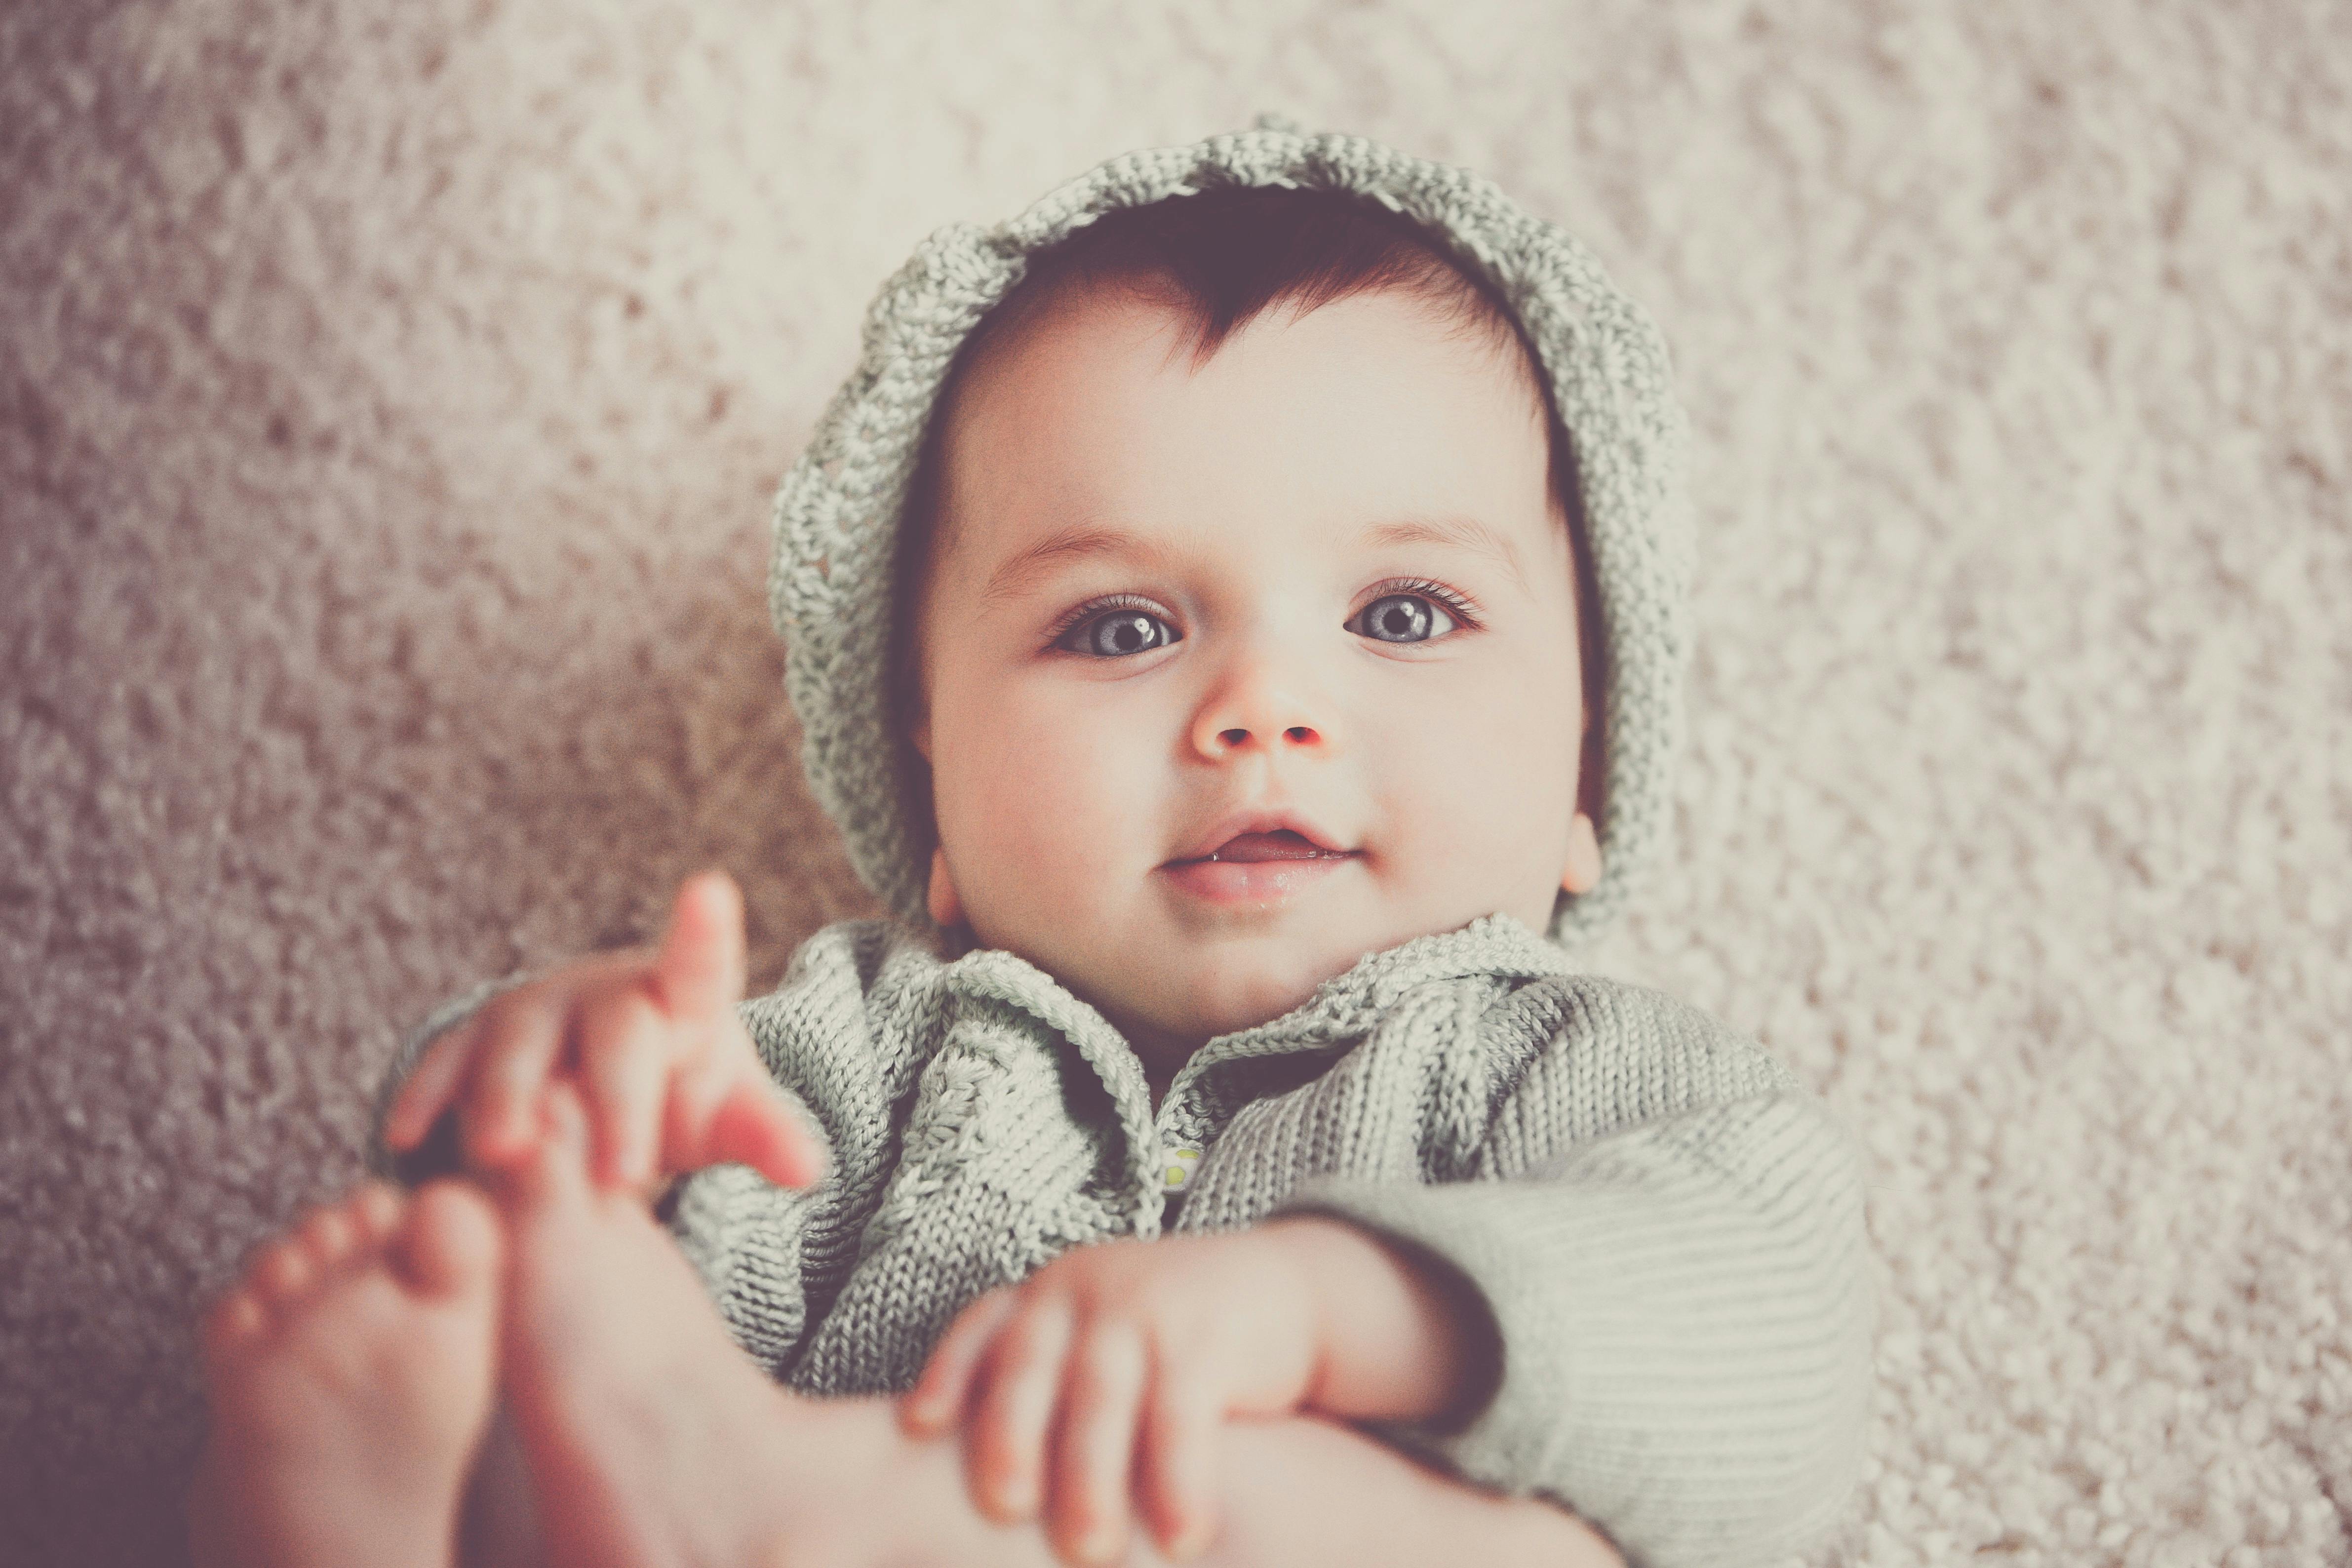 A cute baby | Source: Pexels